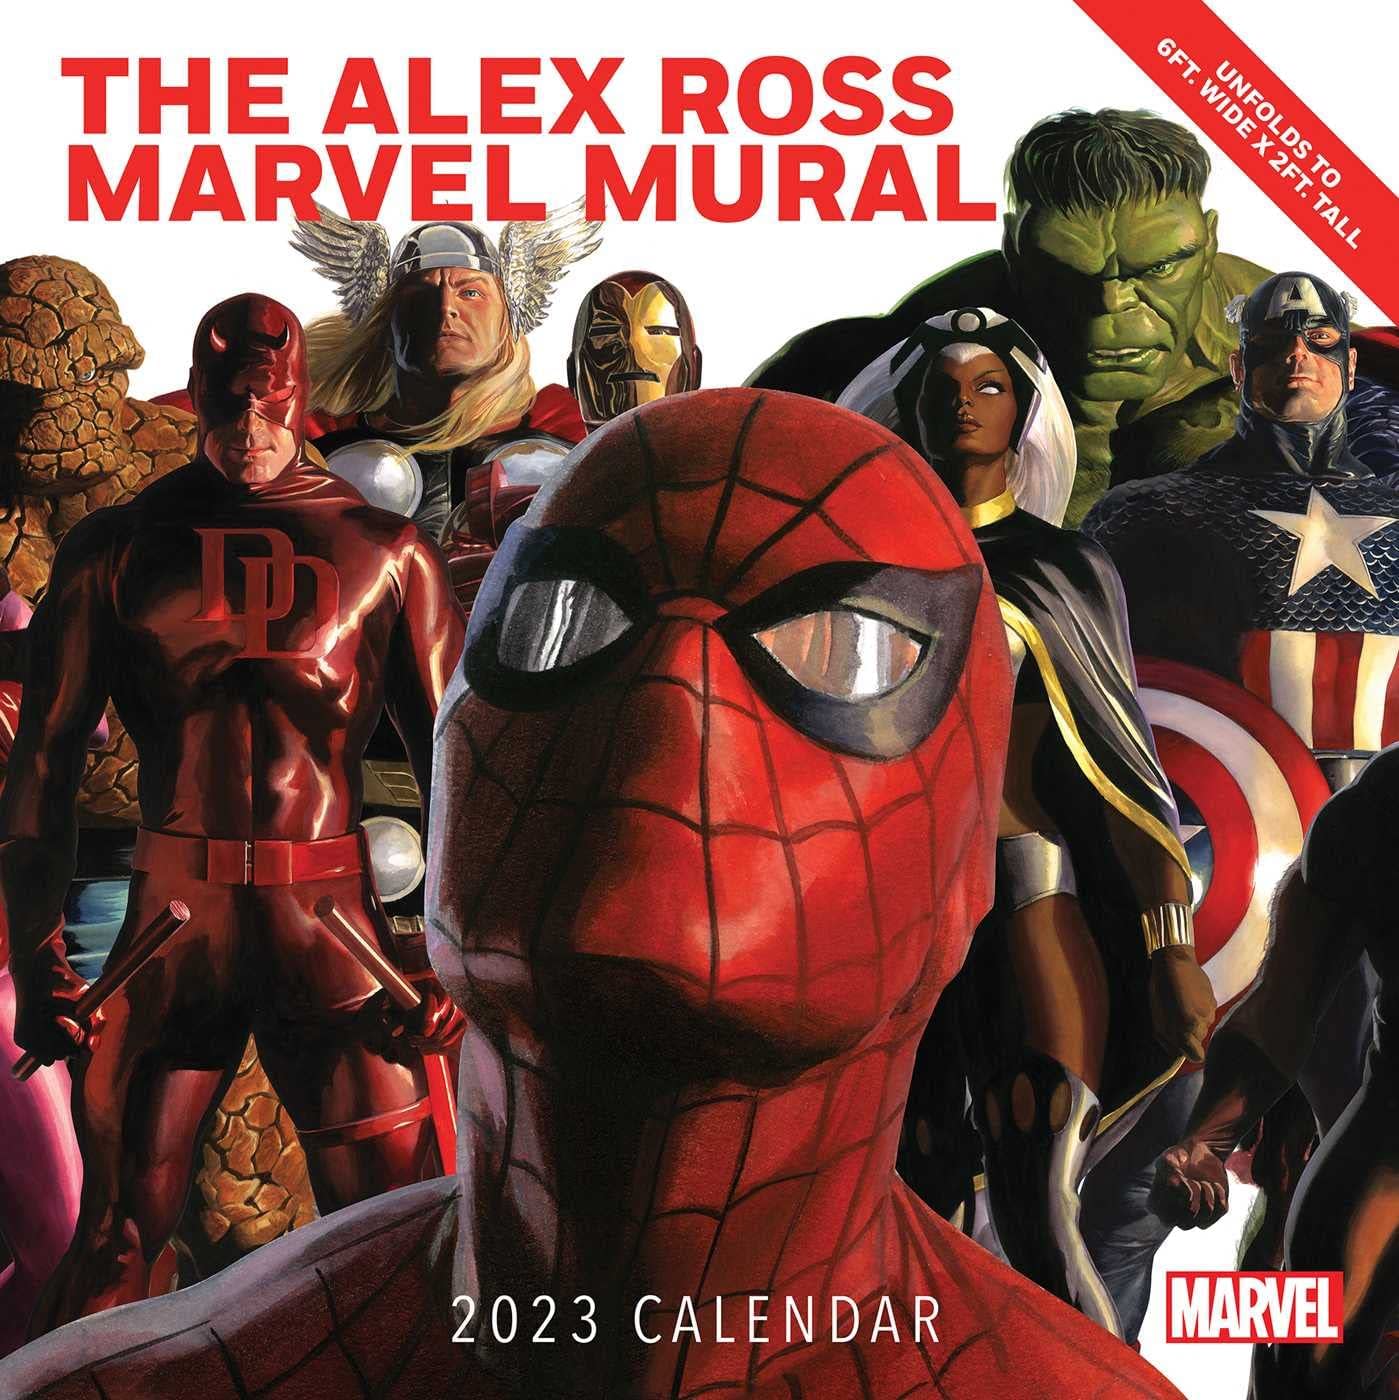 Marvel - Spiderman - Wall Calendars 2024